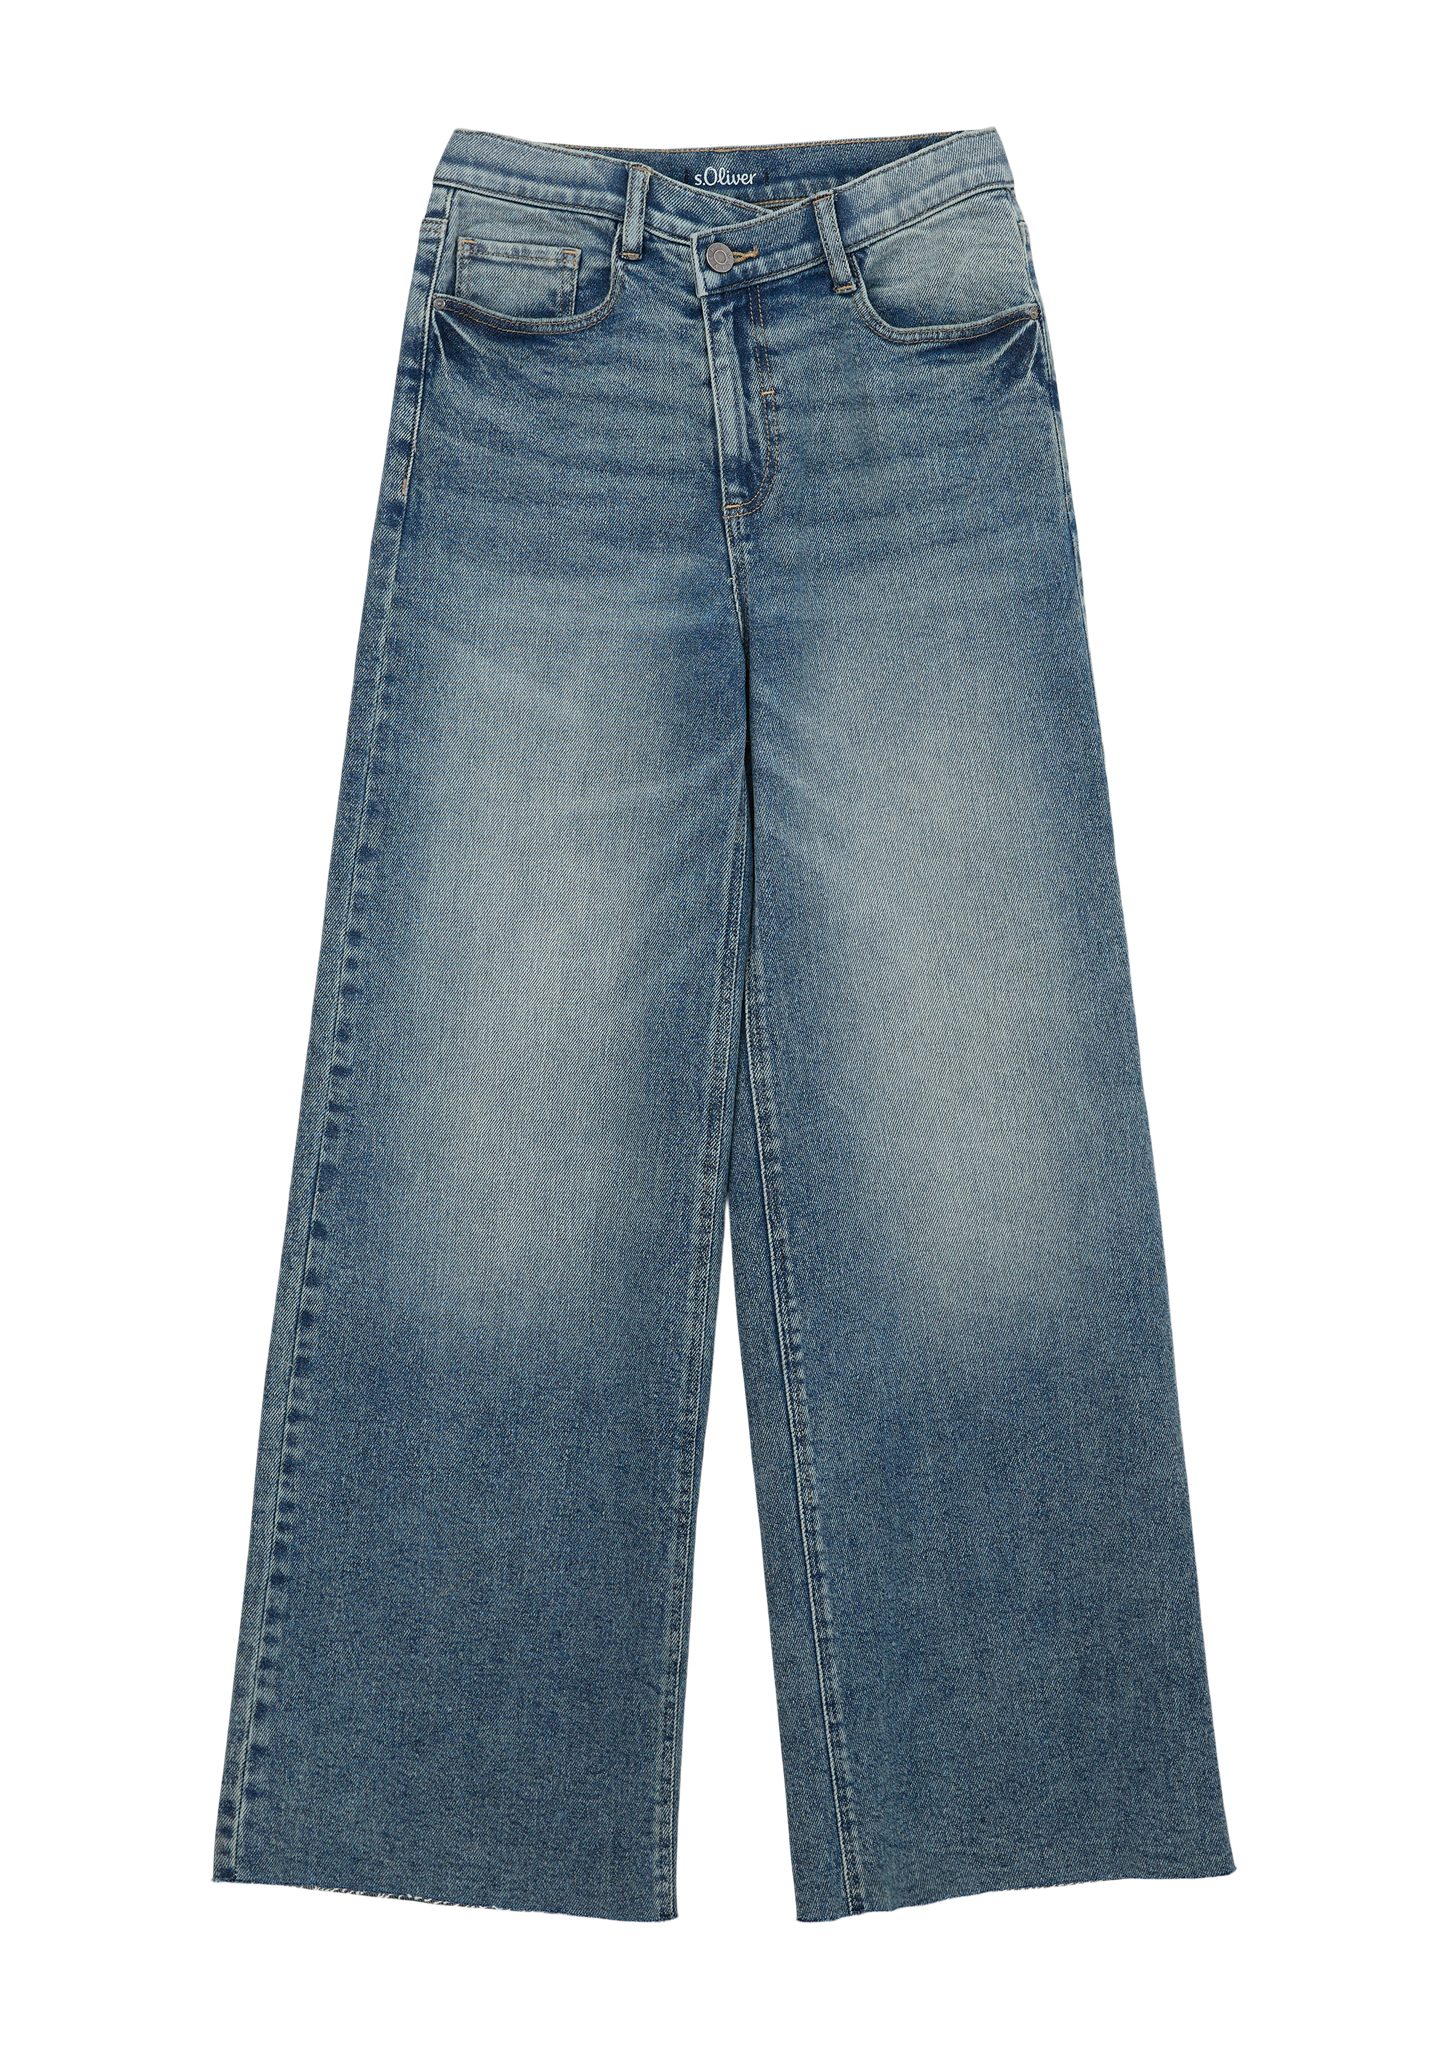 Super asymmetrischem / Fit Stoffhose Bund High Jeans Leg s.Oliver Rise Wide Regular / / / Waschung